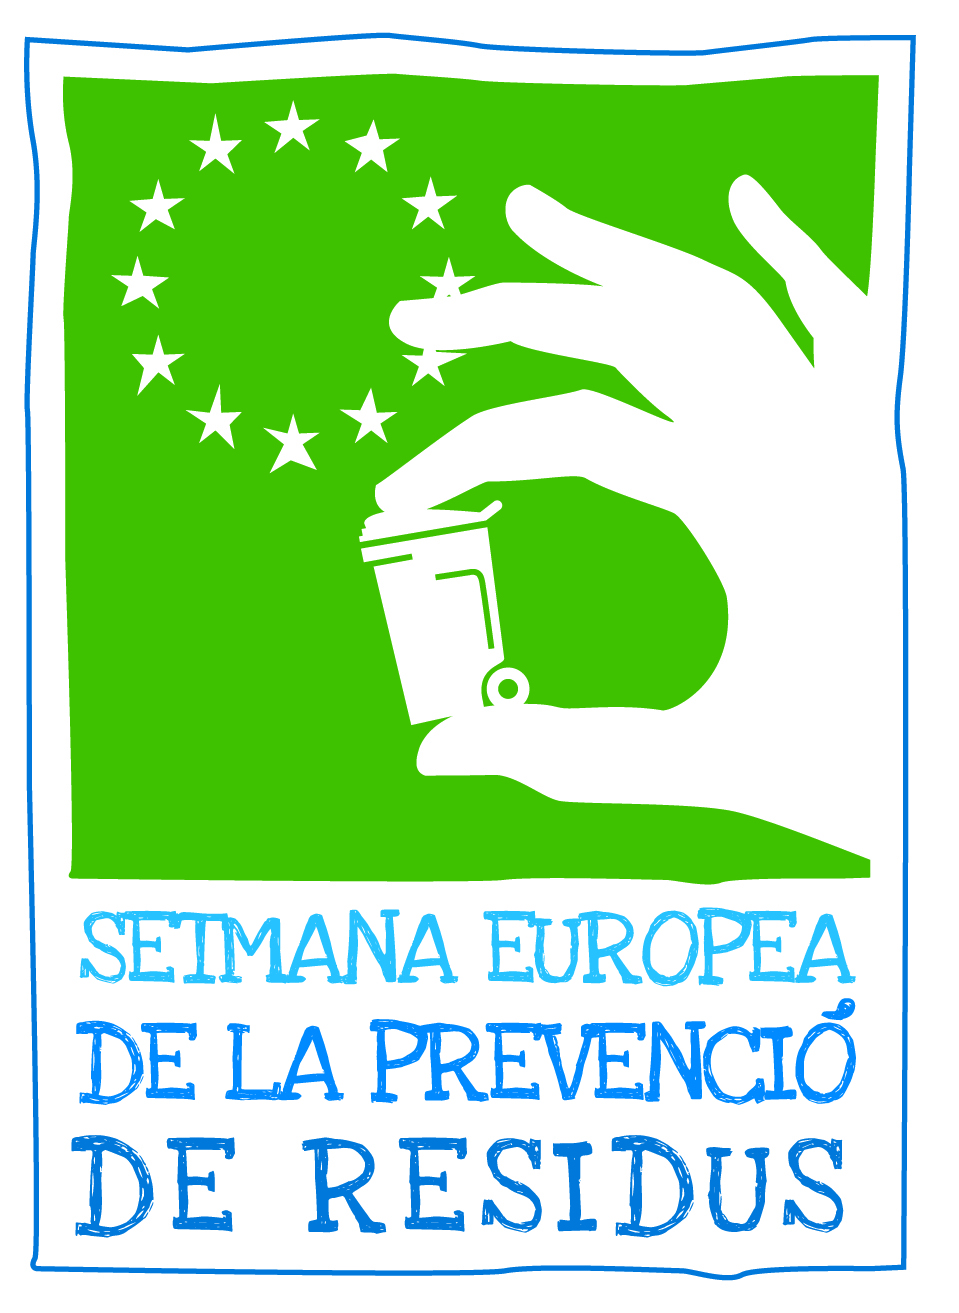 Setmana Europea de Prevenció de residus